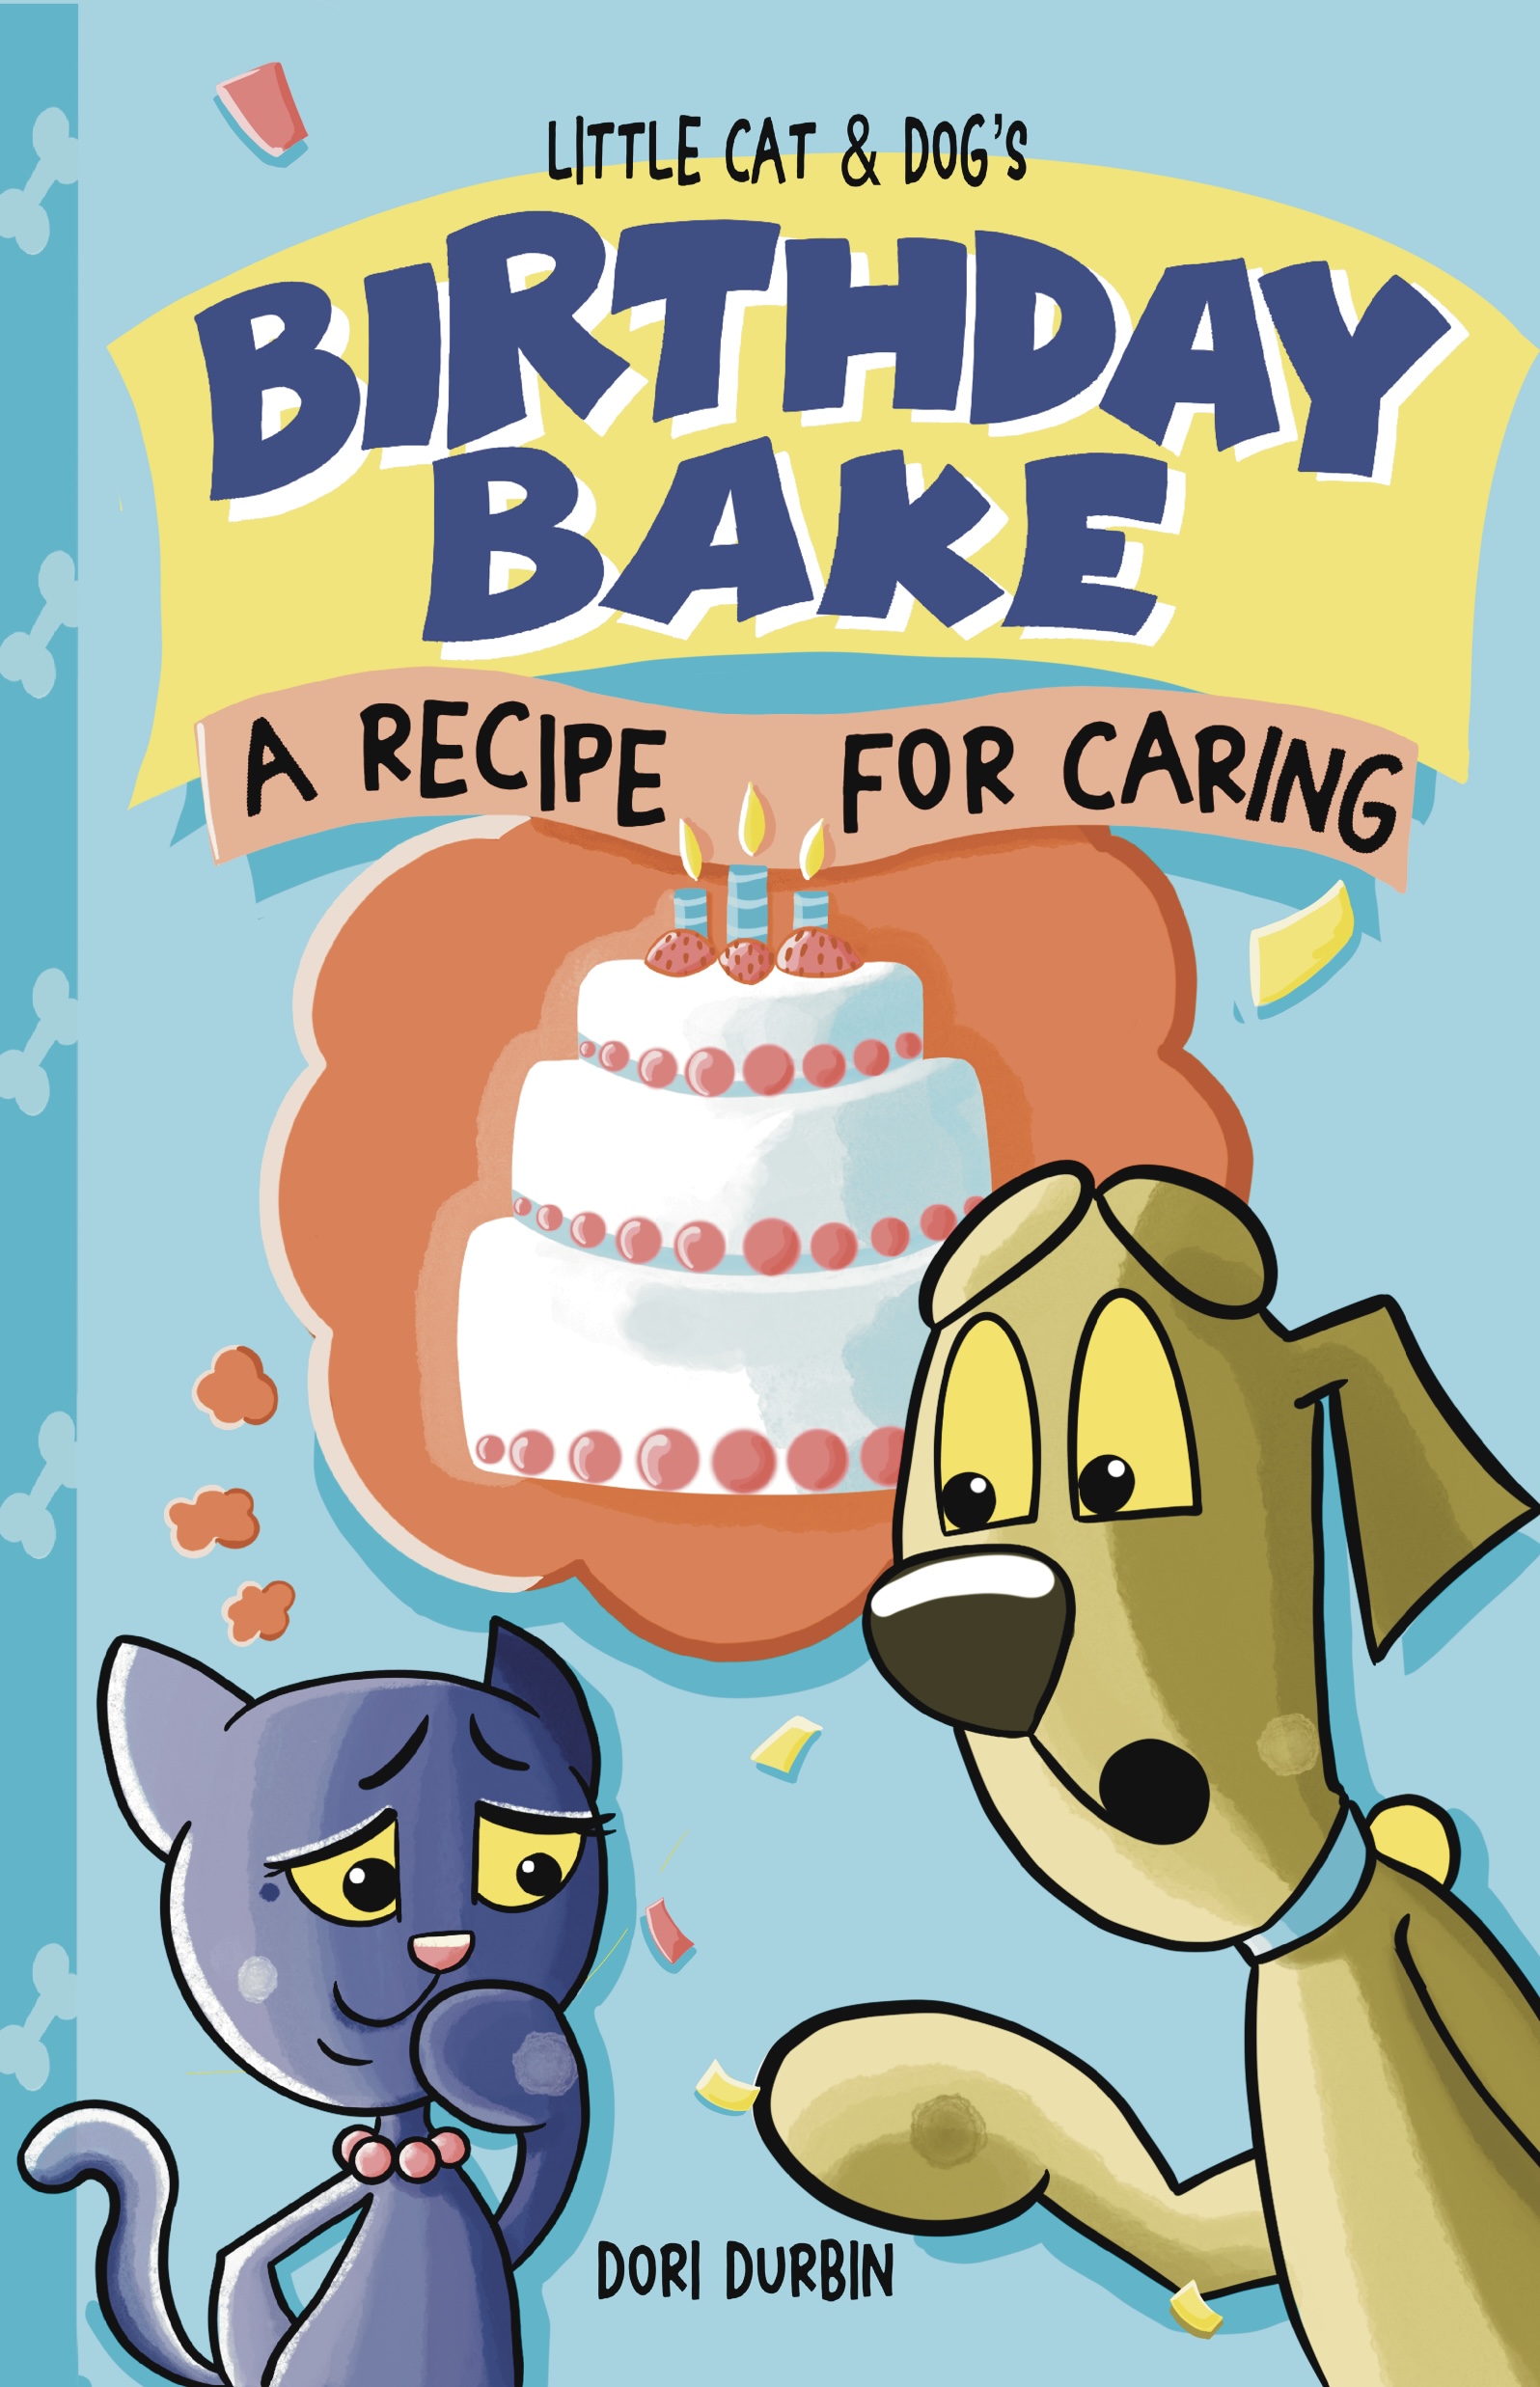 FREE: Little Cat & Dog’s Birthday Bake: A Recipe for Caring by Dori Durbin